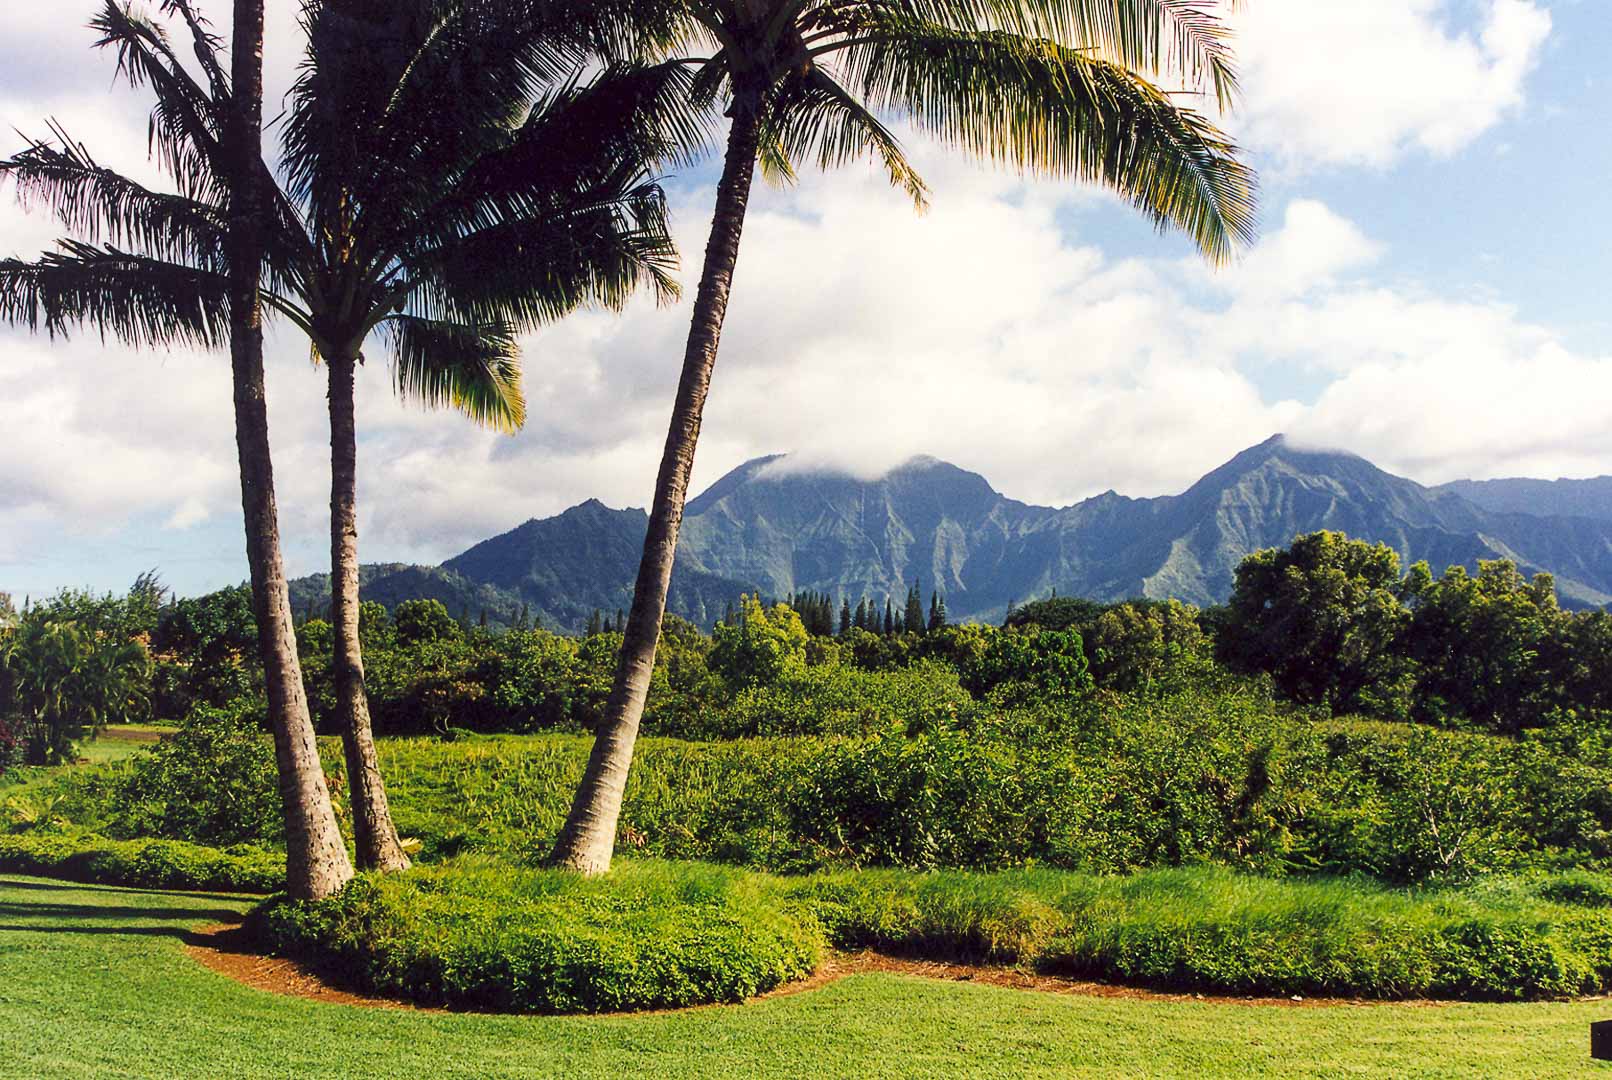 The beautiful view from VRI's Alii Kai Resort in Hawaii